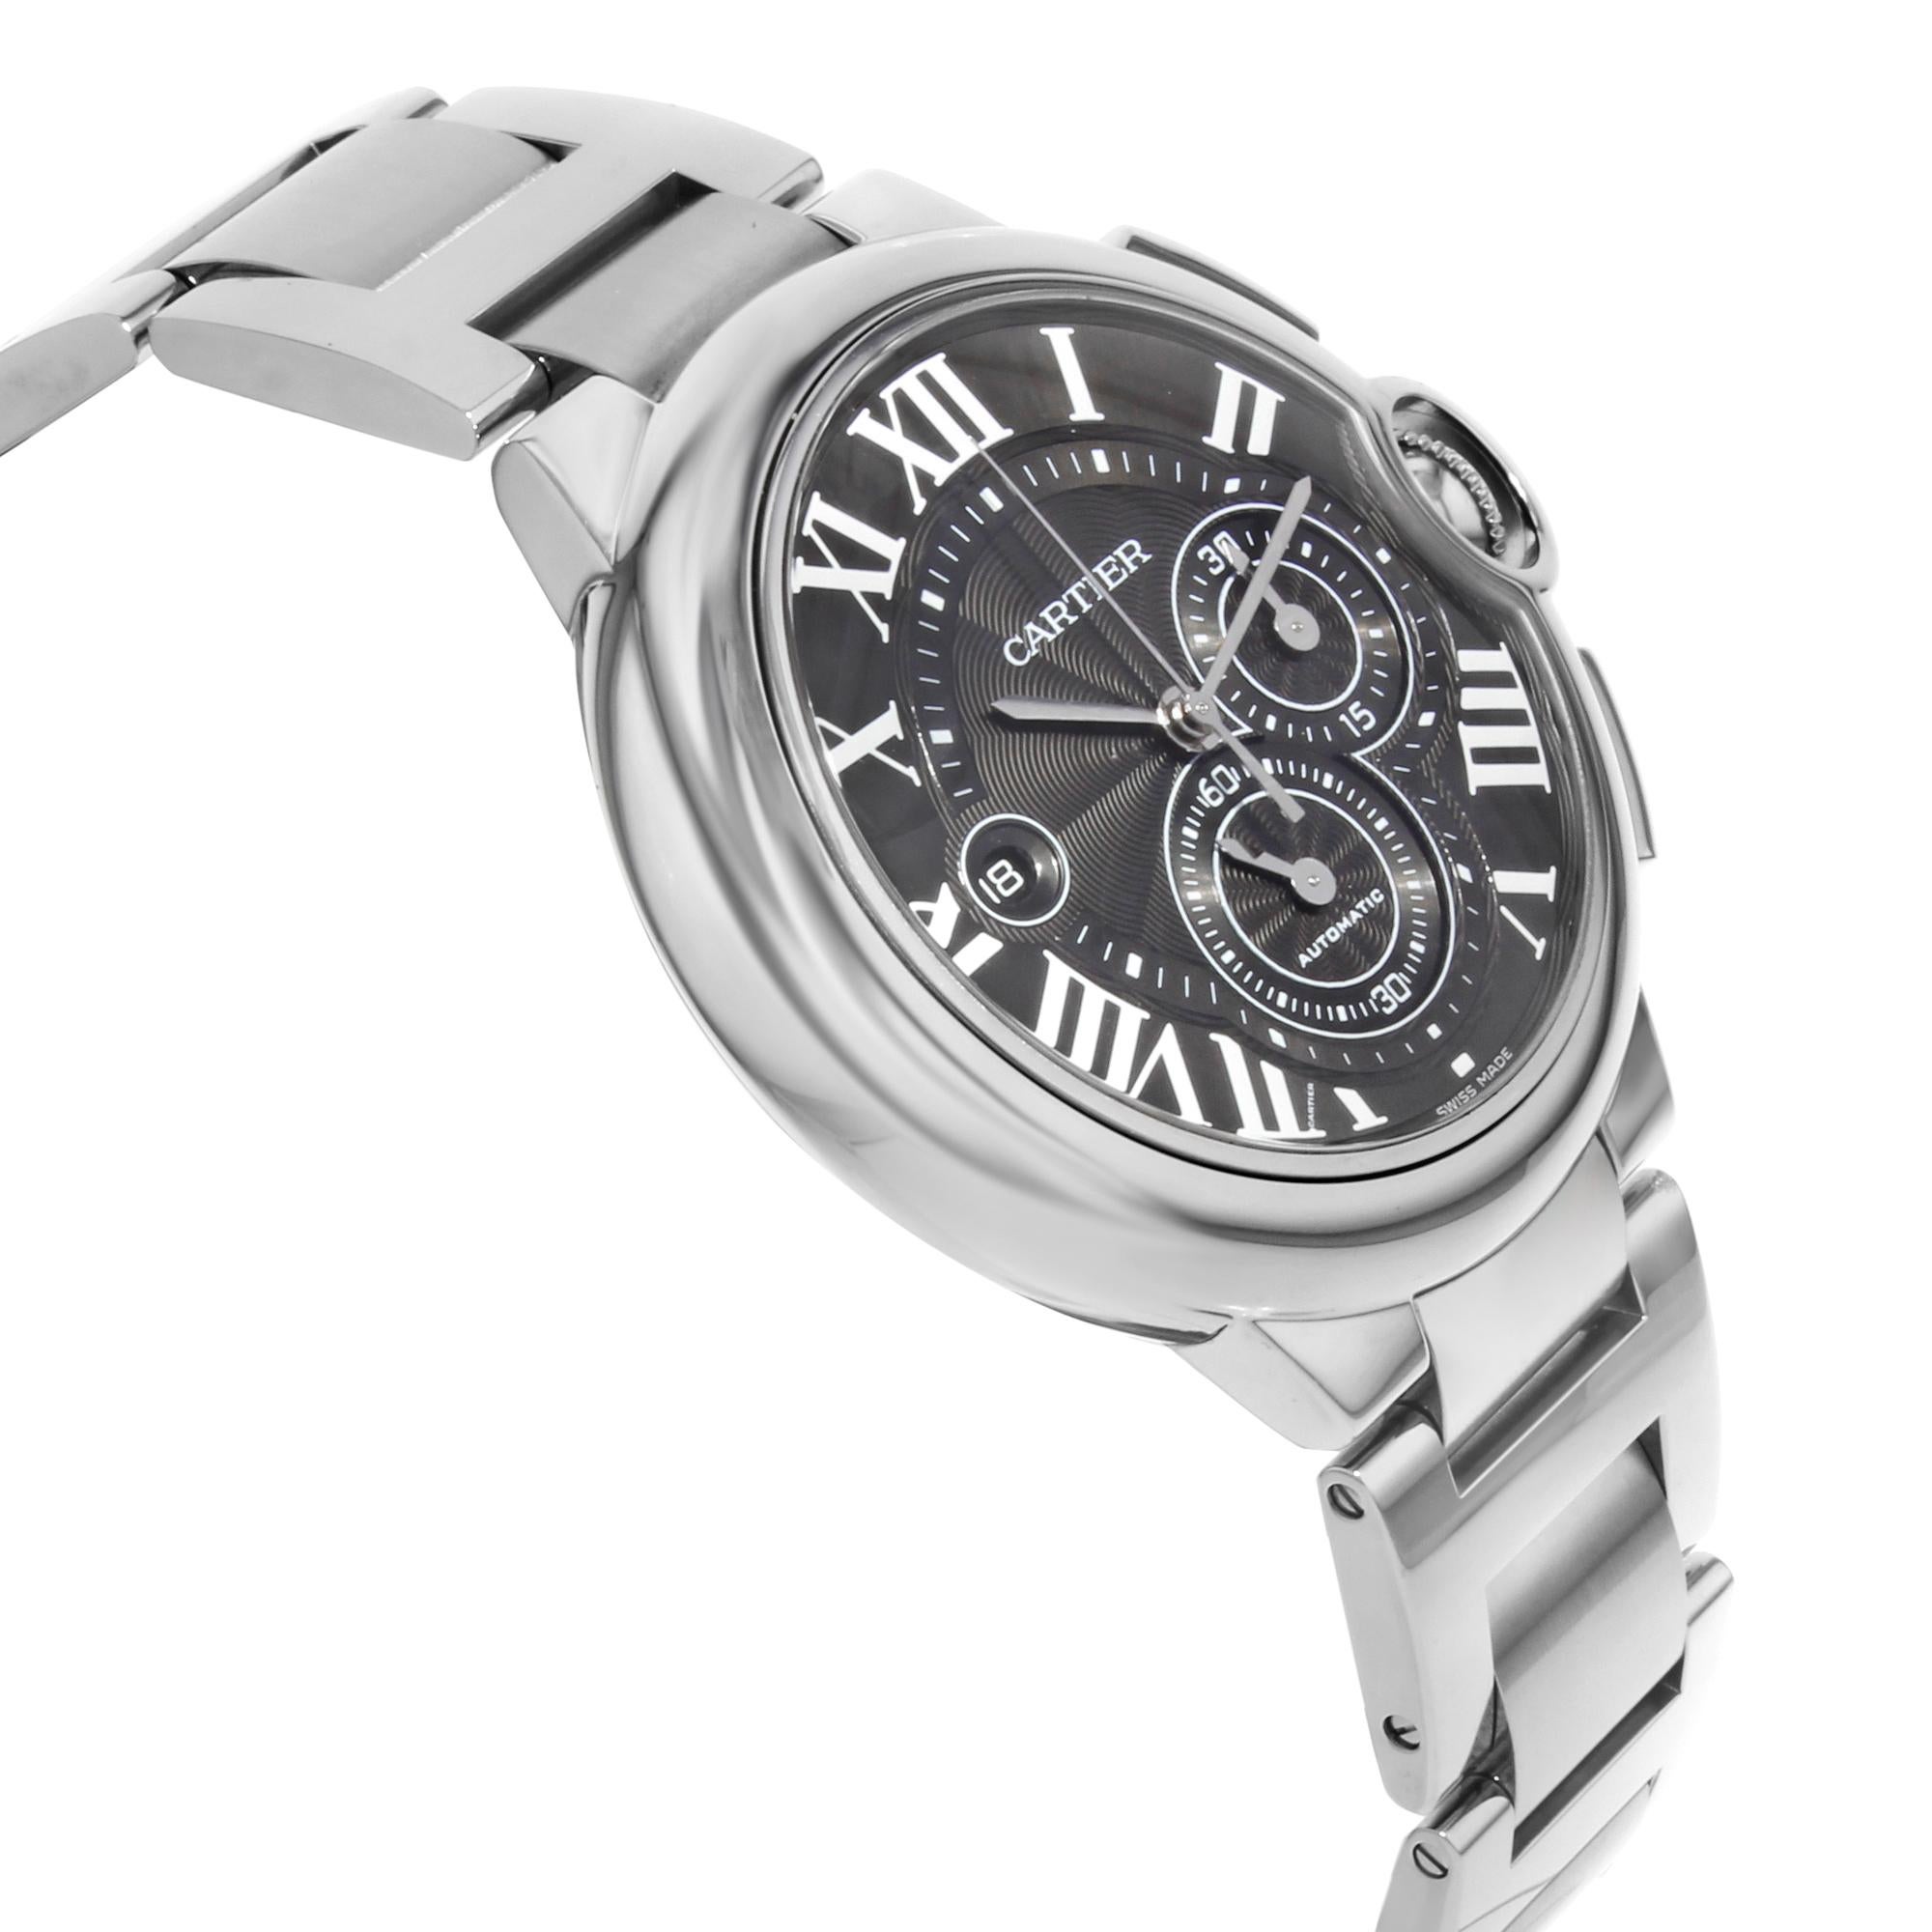 Cartier Ballon Bleu Chronograph Steel Grey Dial Automatic Men's Watch W6920025 1